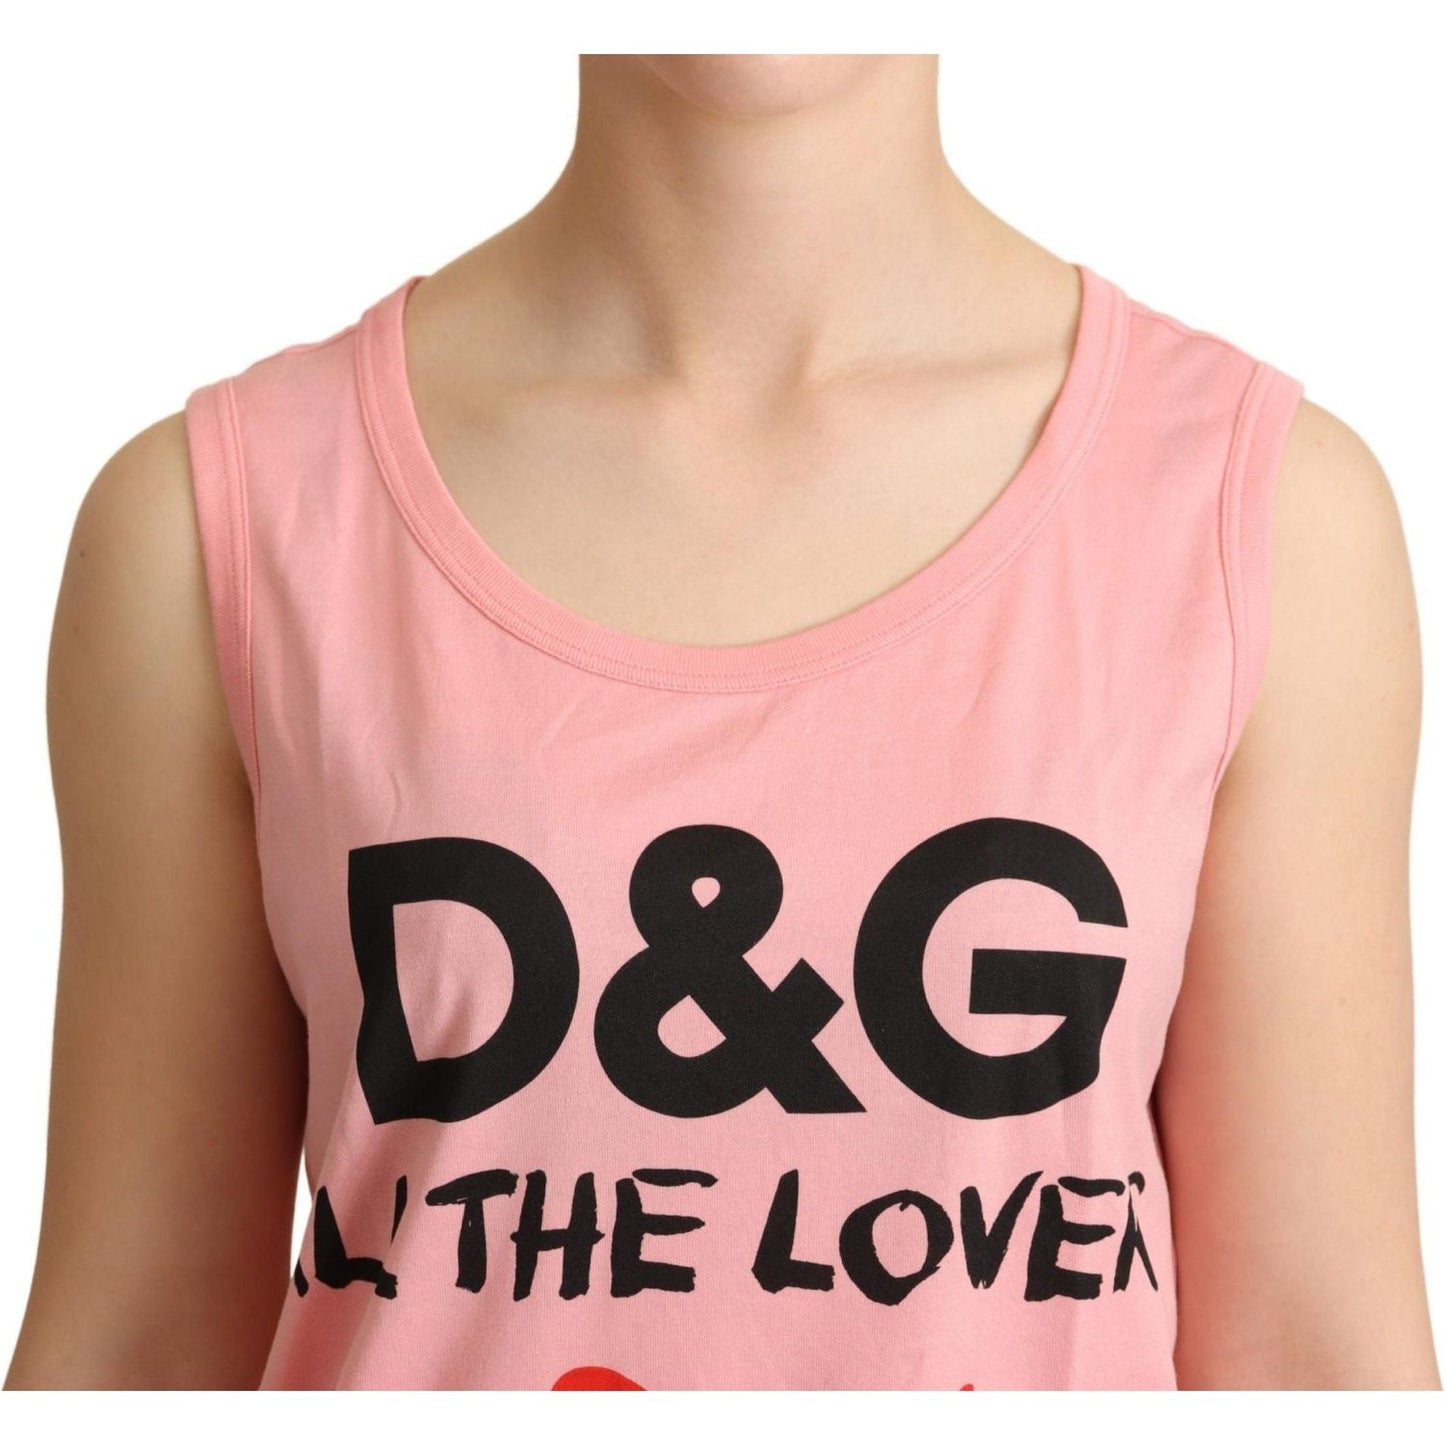 Dolce & Gabbana Chic Pink Motive Print Crewneck Tee WOMAN T-SHIRTS pink-all-the-lovers-tank-top-t-shirt IMG_9815-scaled-6658e173-947.jpg